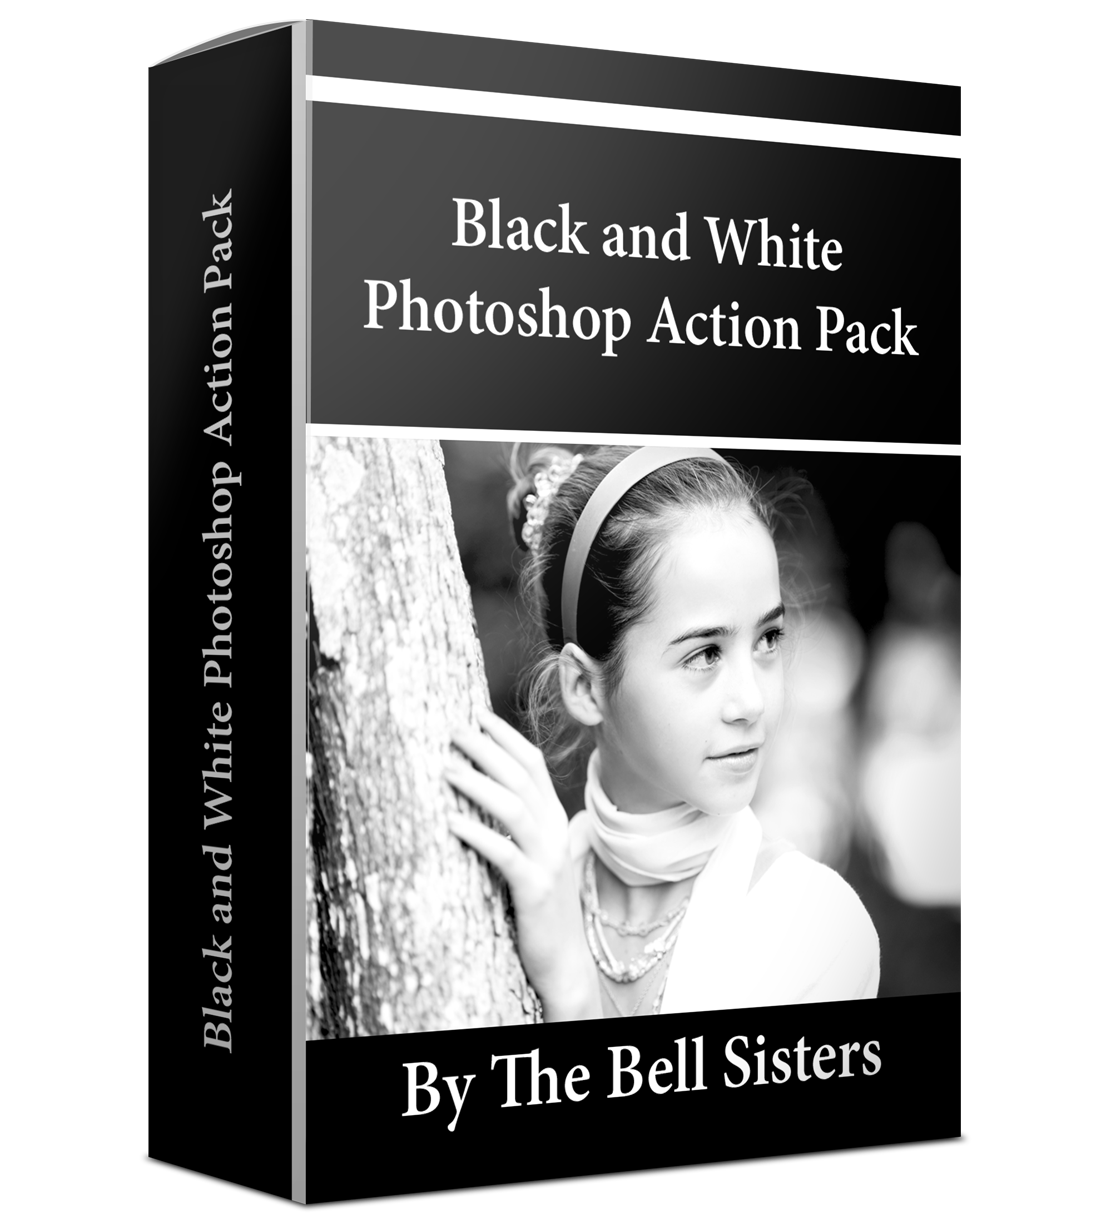 Black & White Photoshop Action Pack